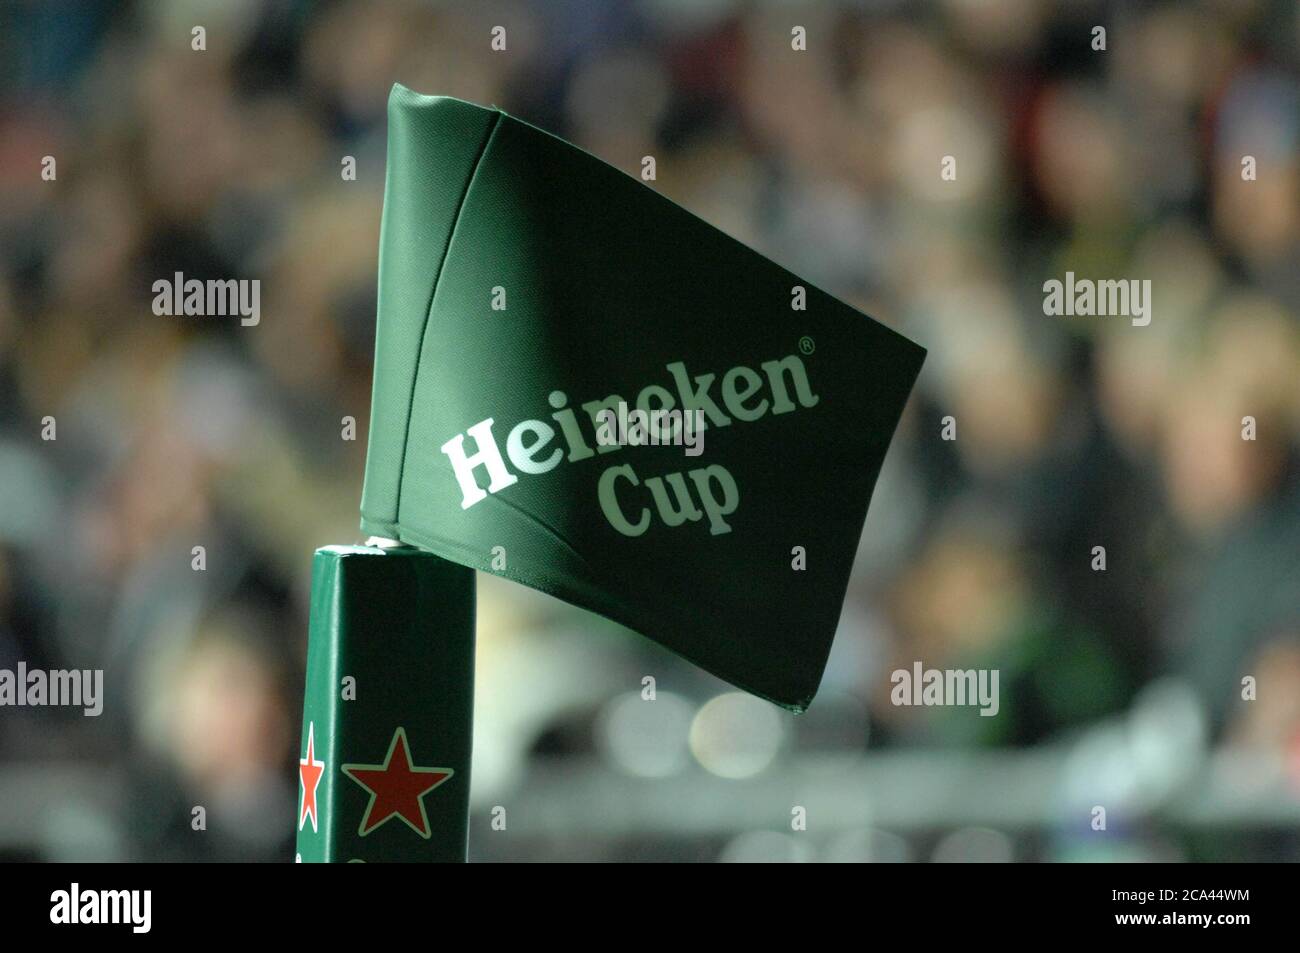 Heineken Cup Round 2 - Ospreys v London Irish @ The Liberty Stadium in Swansea. Stock Photo